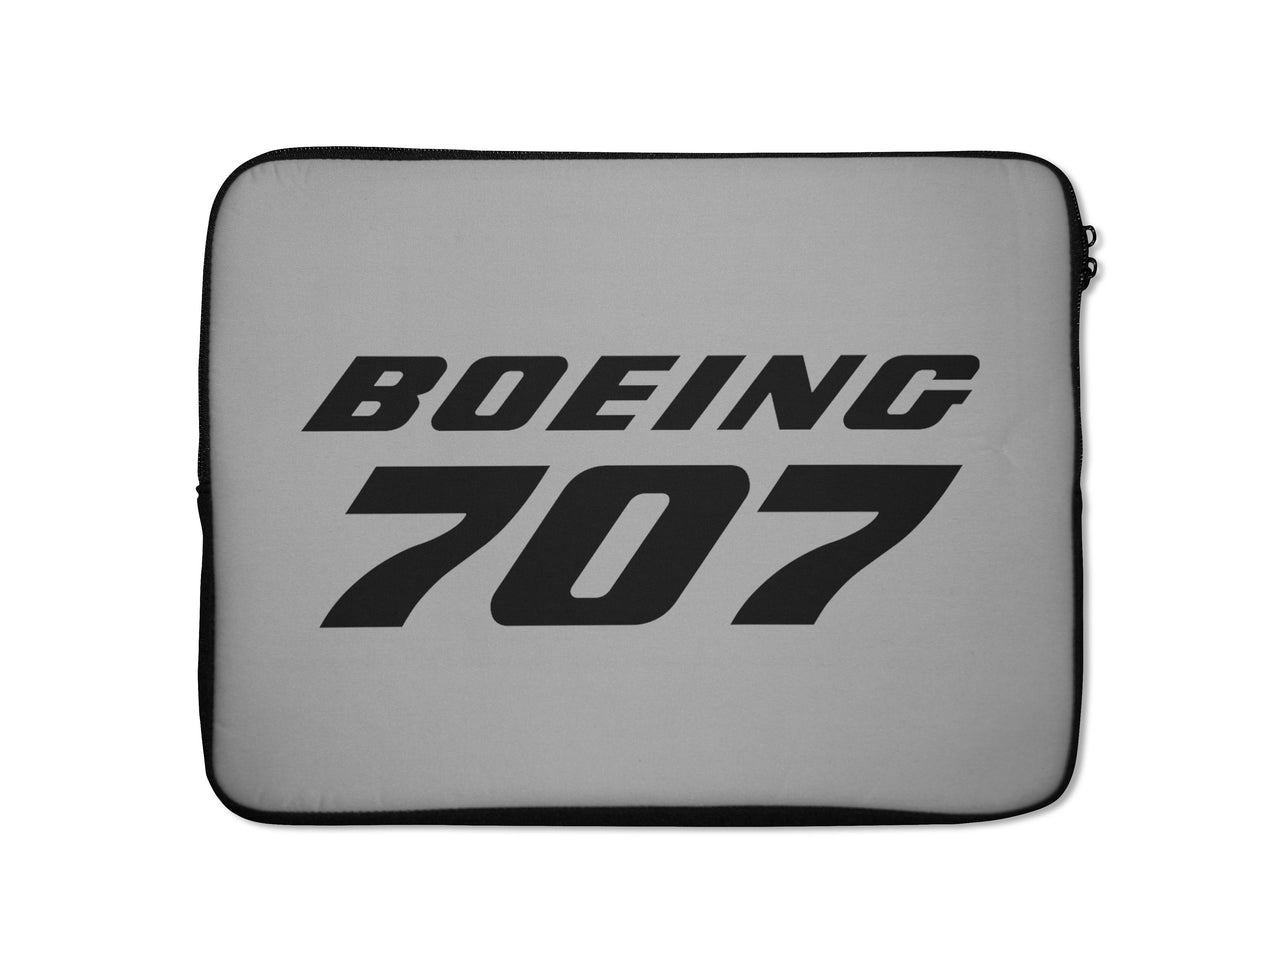 Boeing 707 & Text Designed Laptop & Tablet Cases